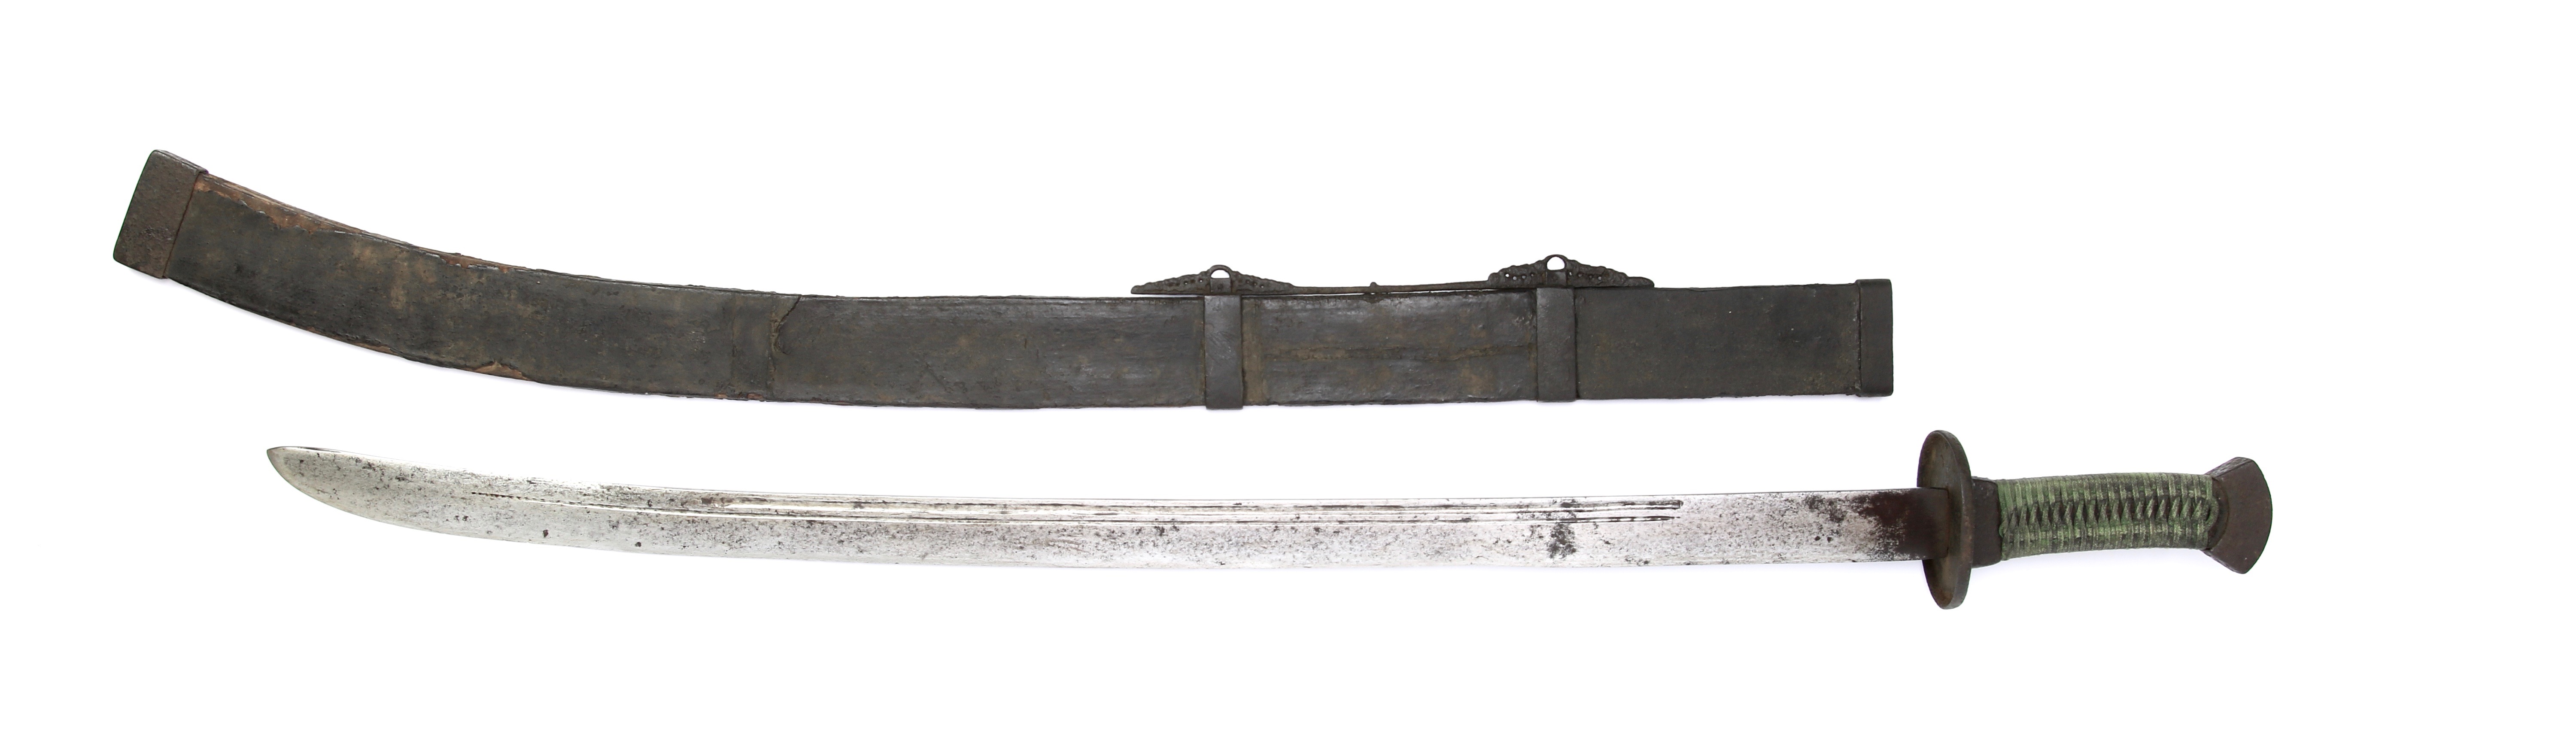 18th century military saber